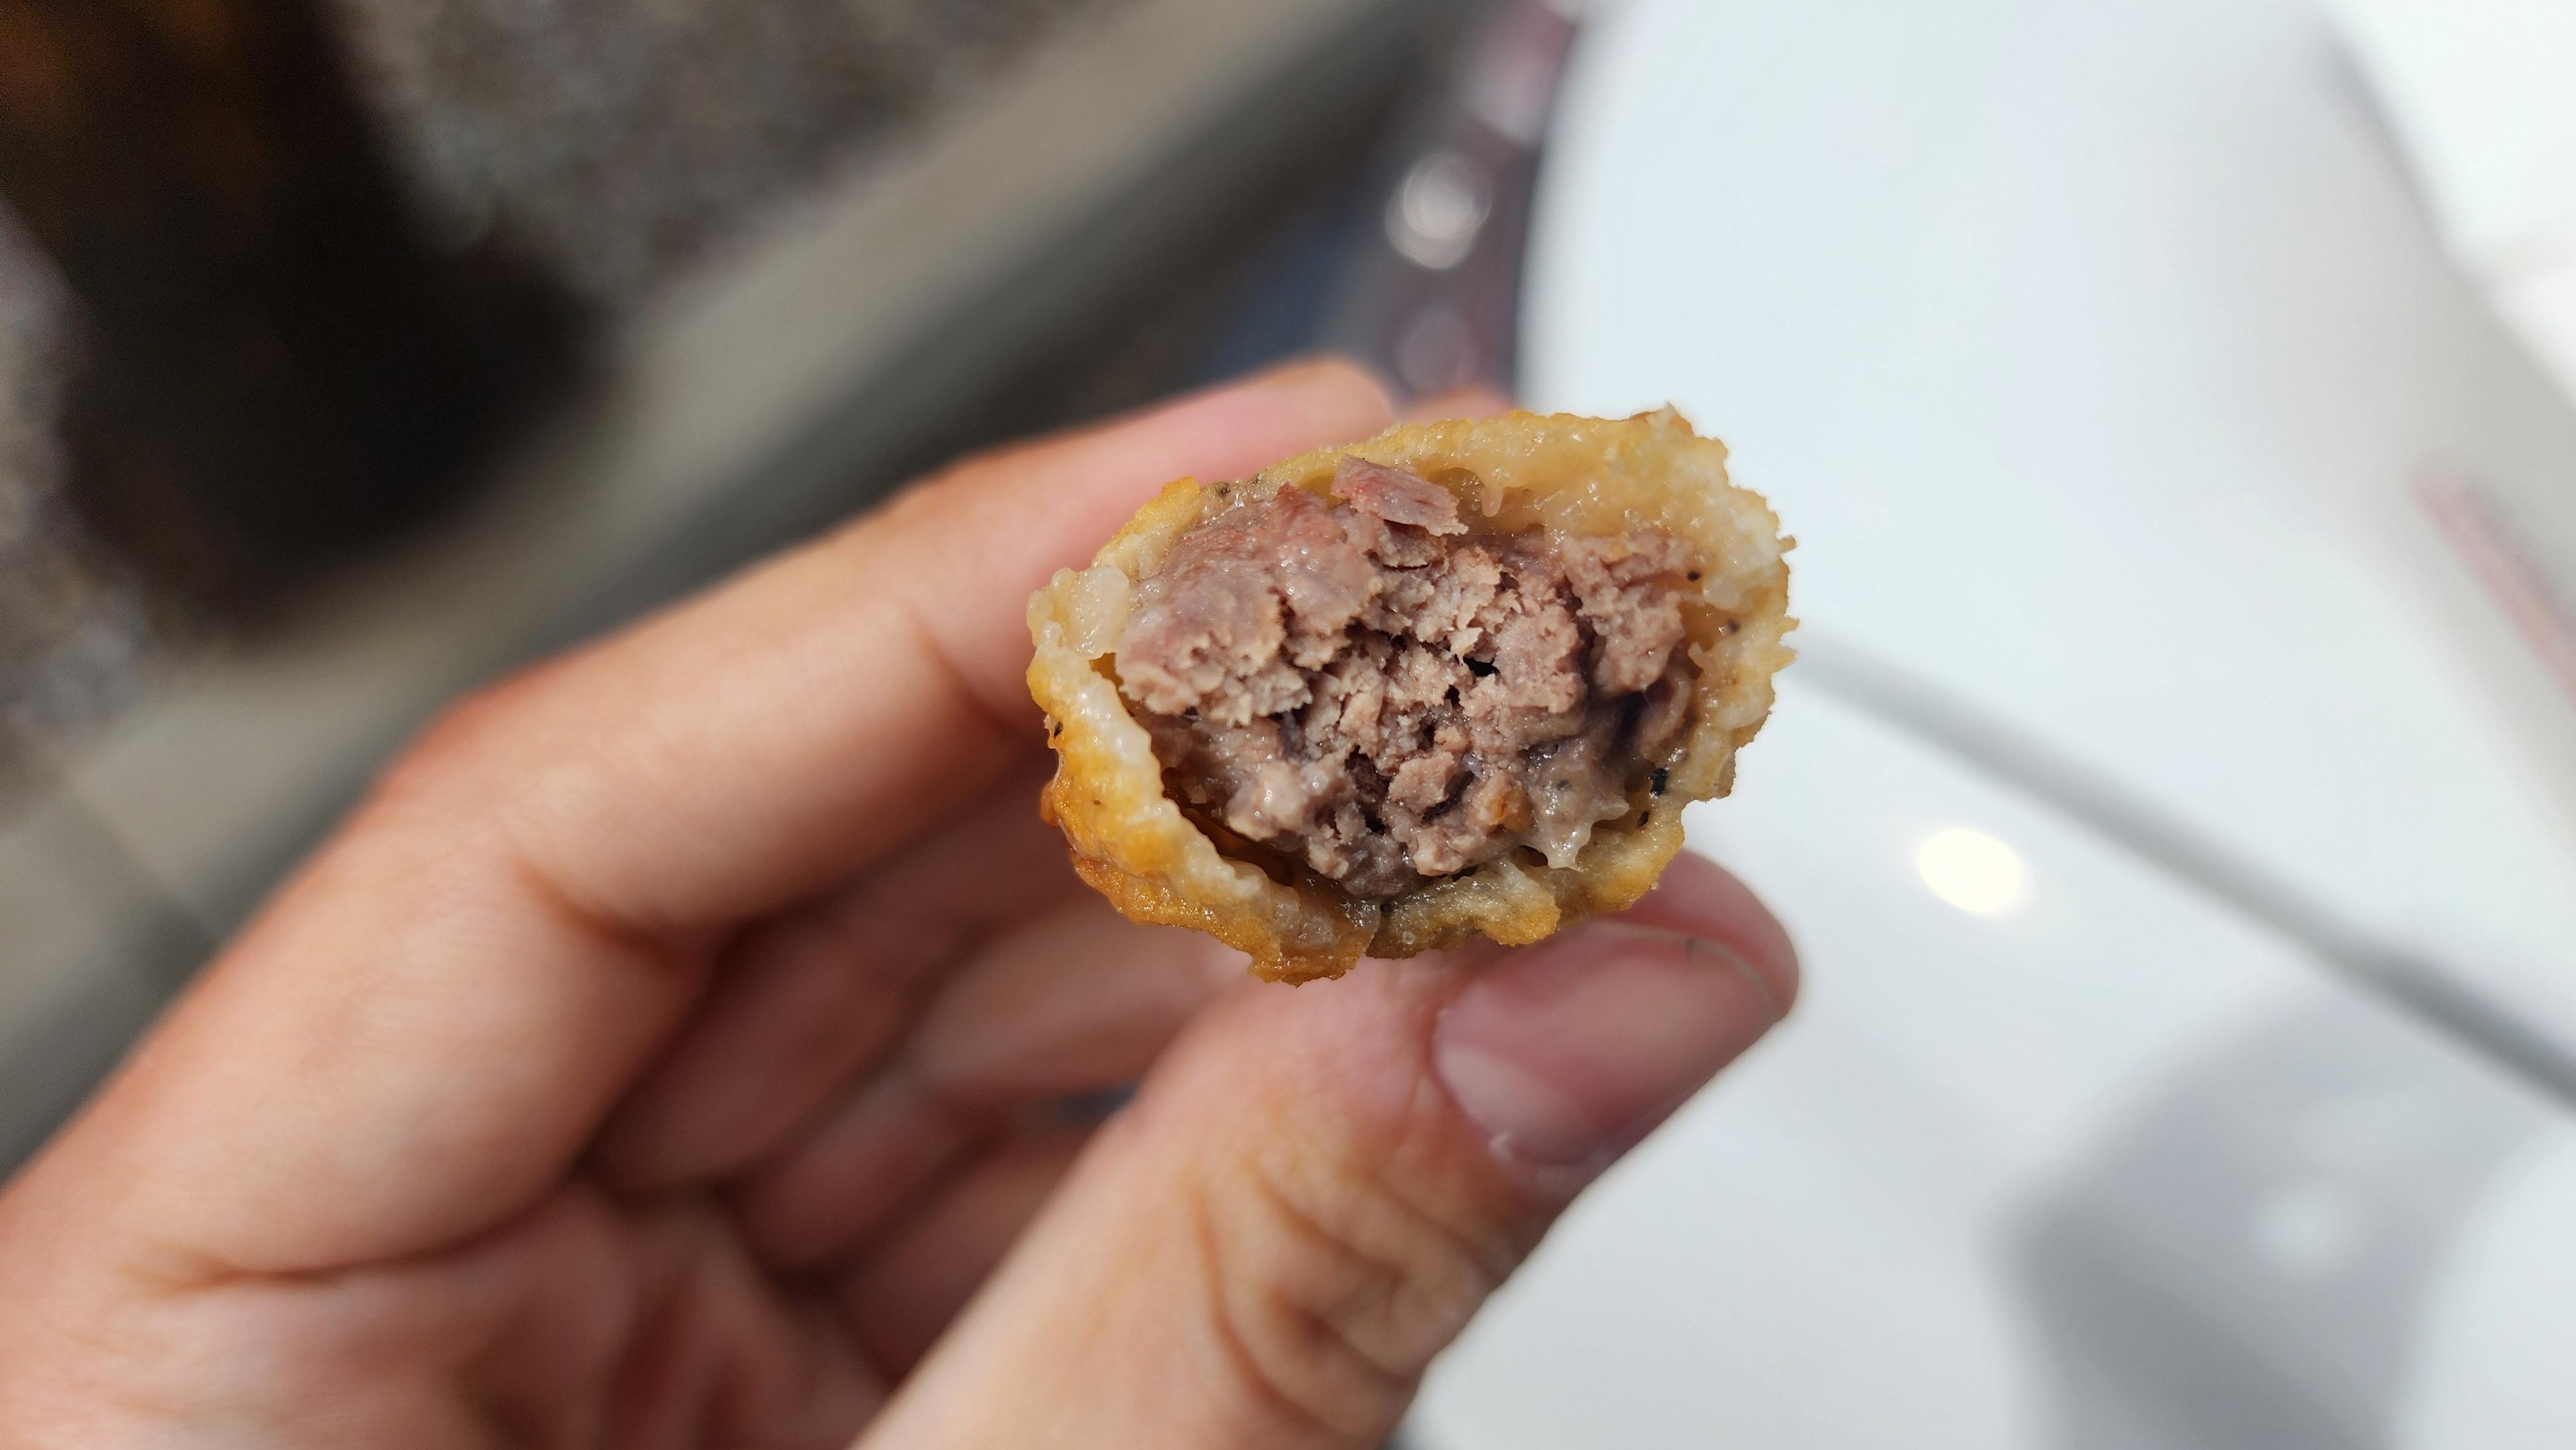 Closeup of a fried steak finger from Mac's Steak in the Rough